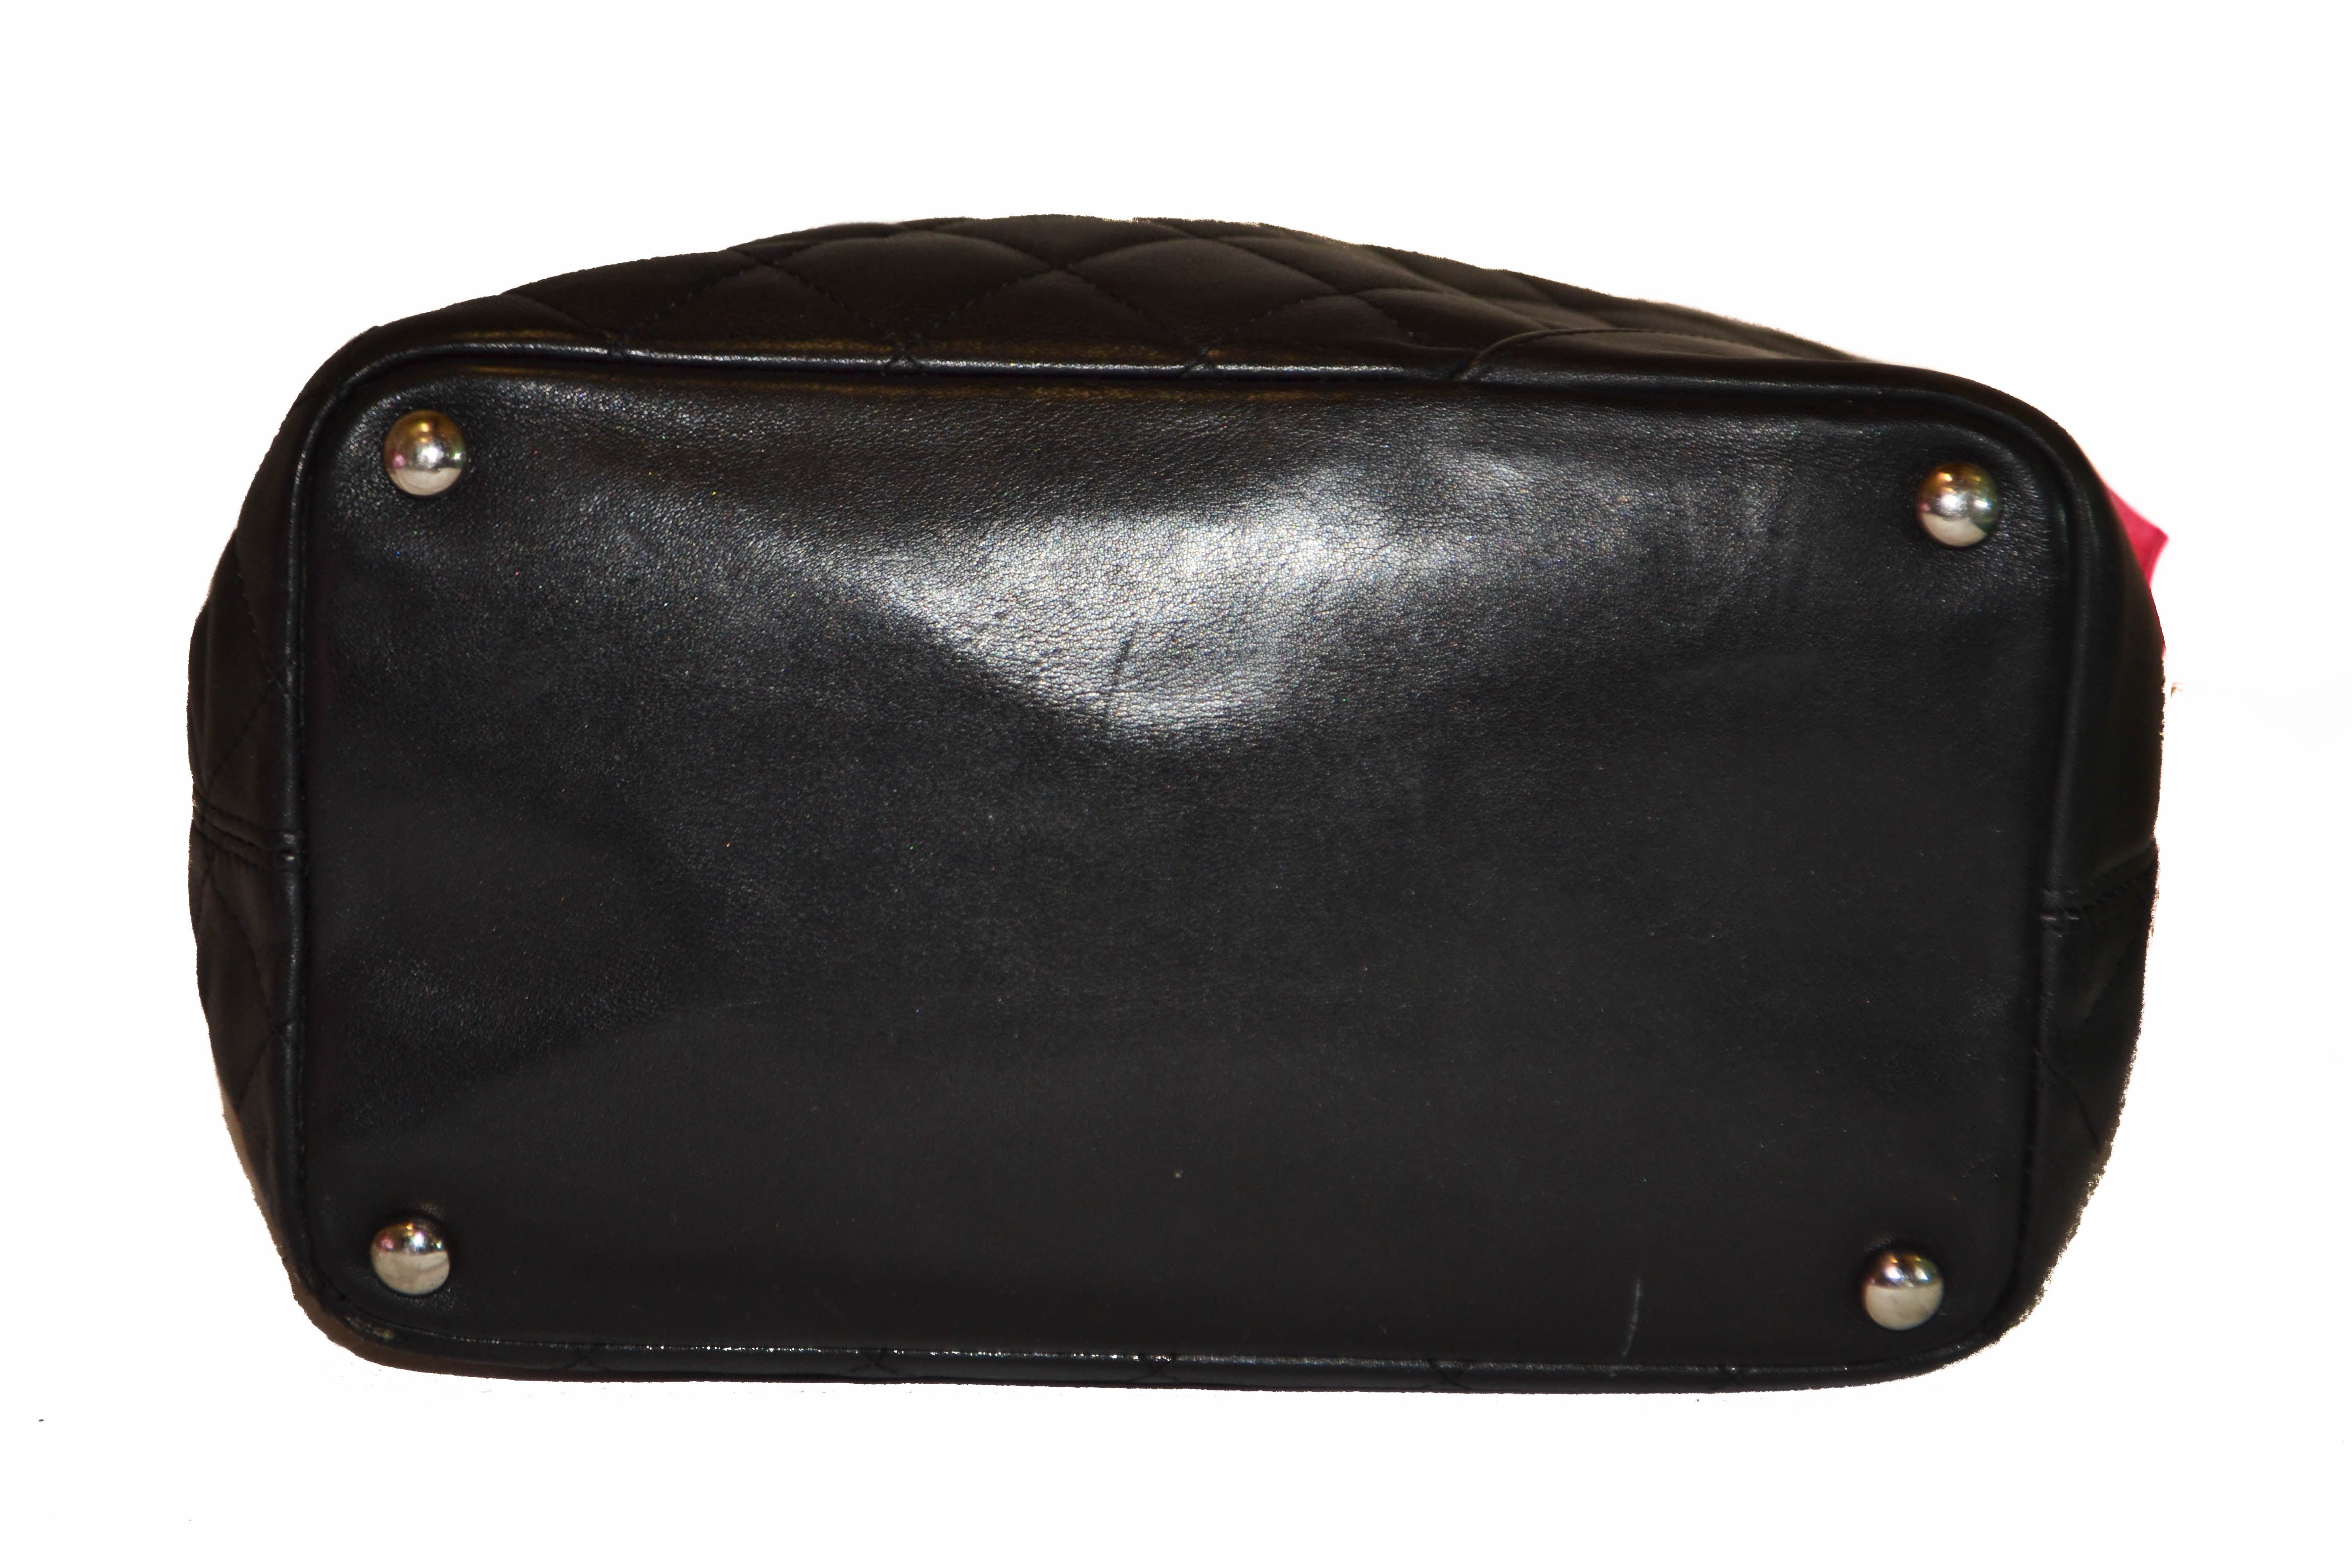 Authentic Chanel Black Petite Cambon Tote Shoulder Bag